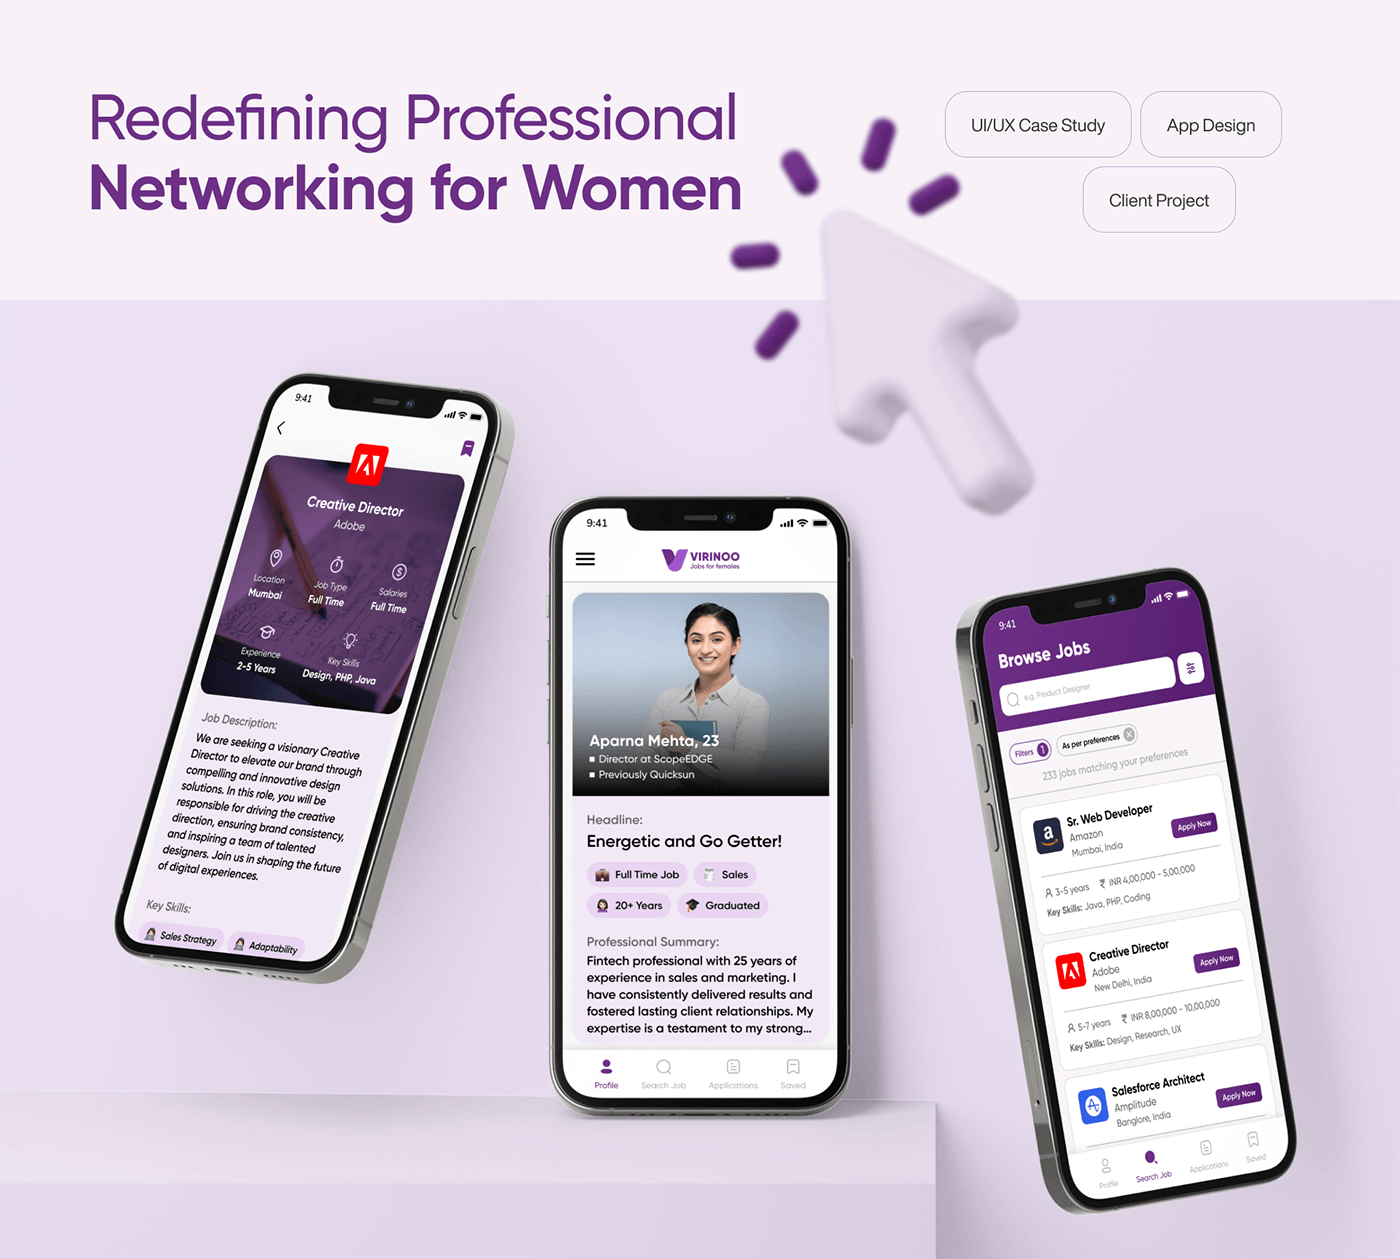 Job finder App job portal app design women networking UIUX design Case Study Mobile app user experience Empowering Women